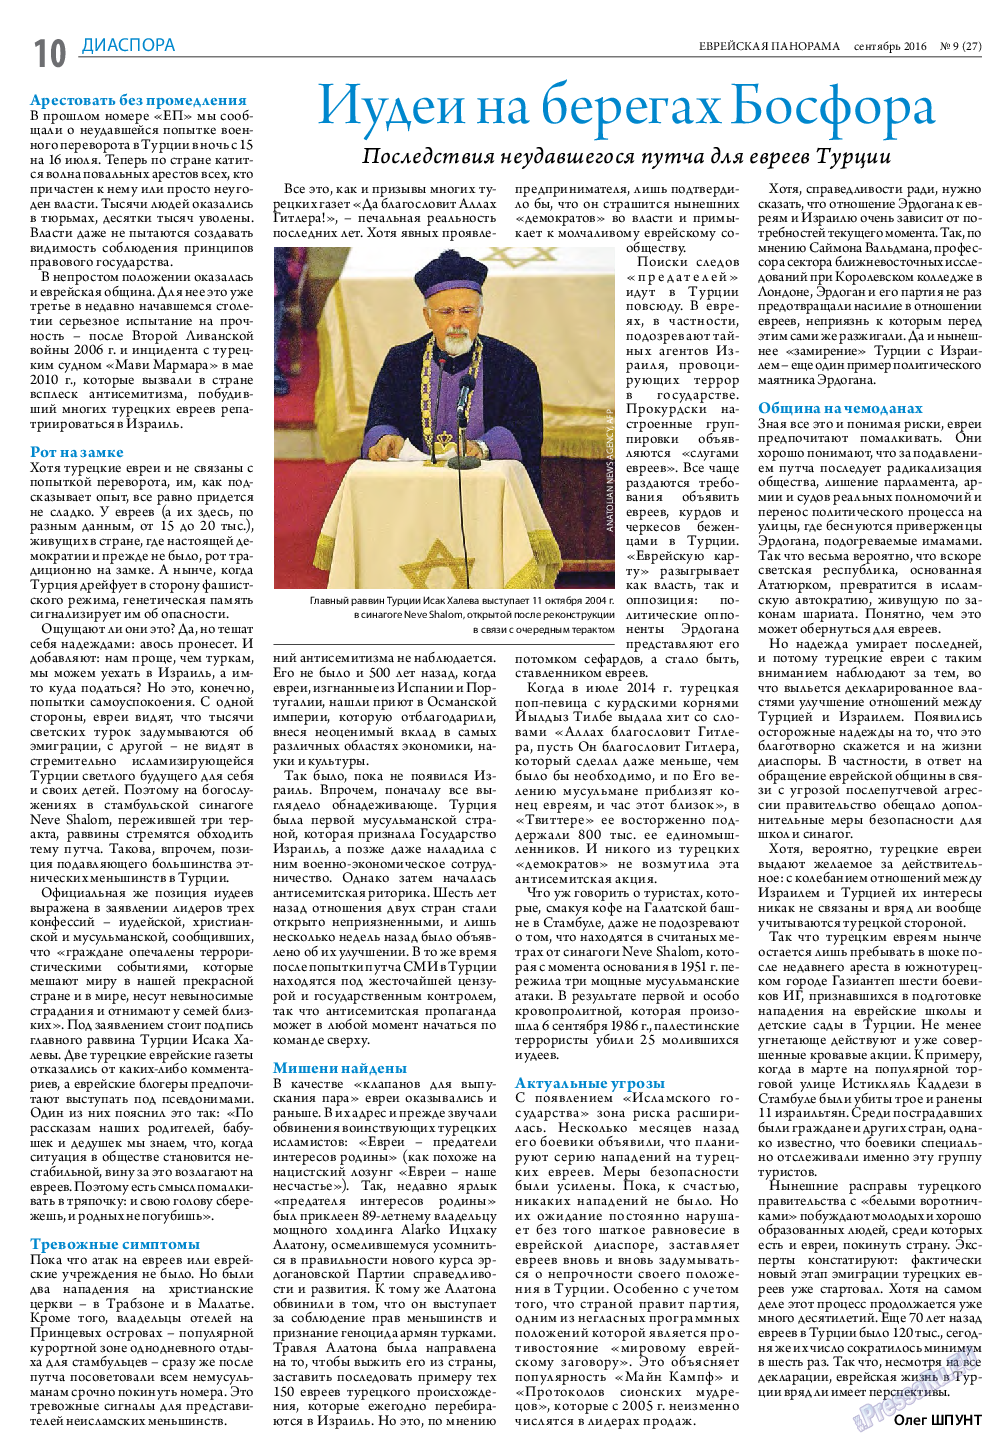 Еврейская панорама, газета. 2016 №9 стр.10